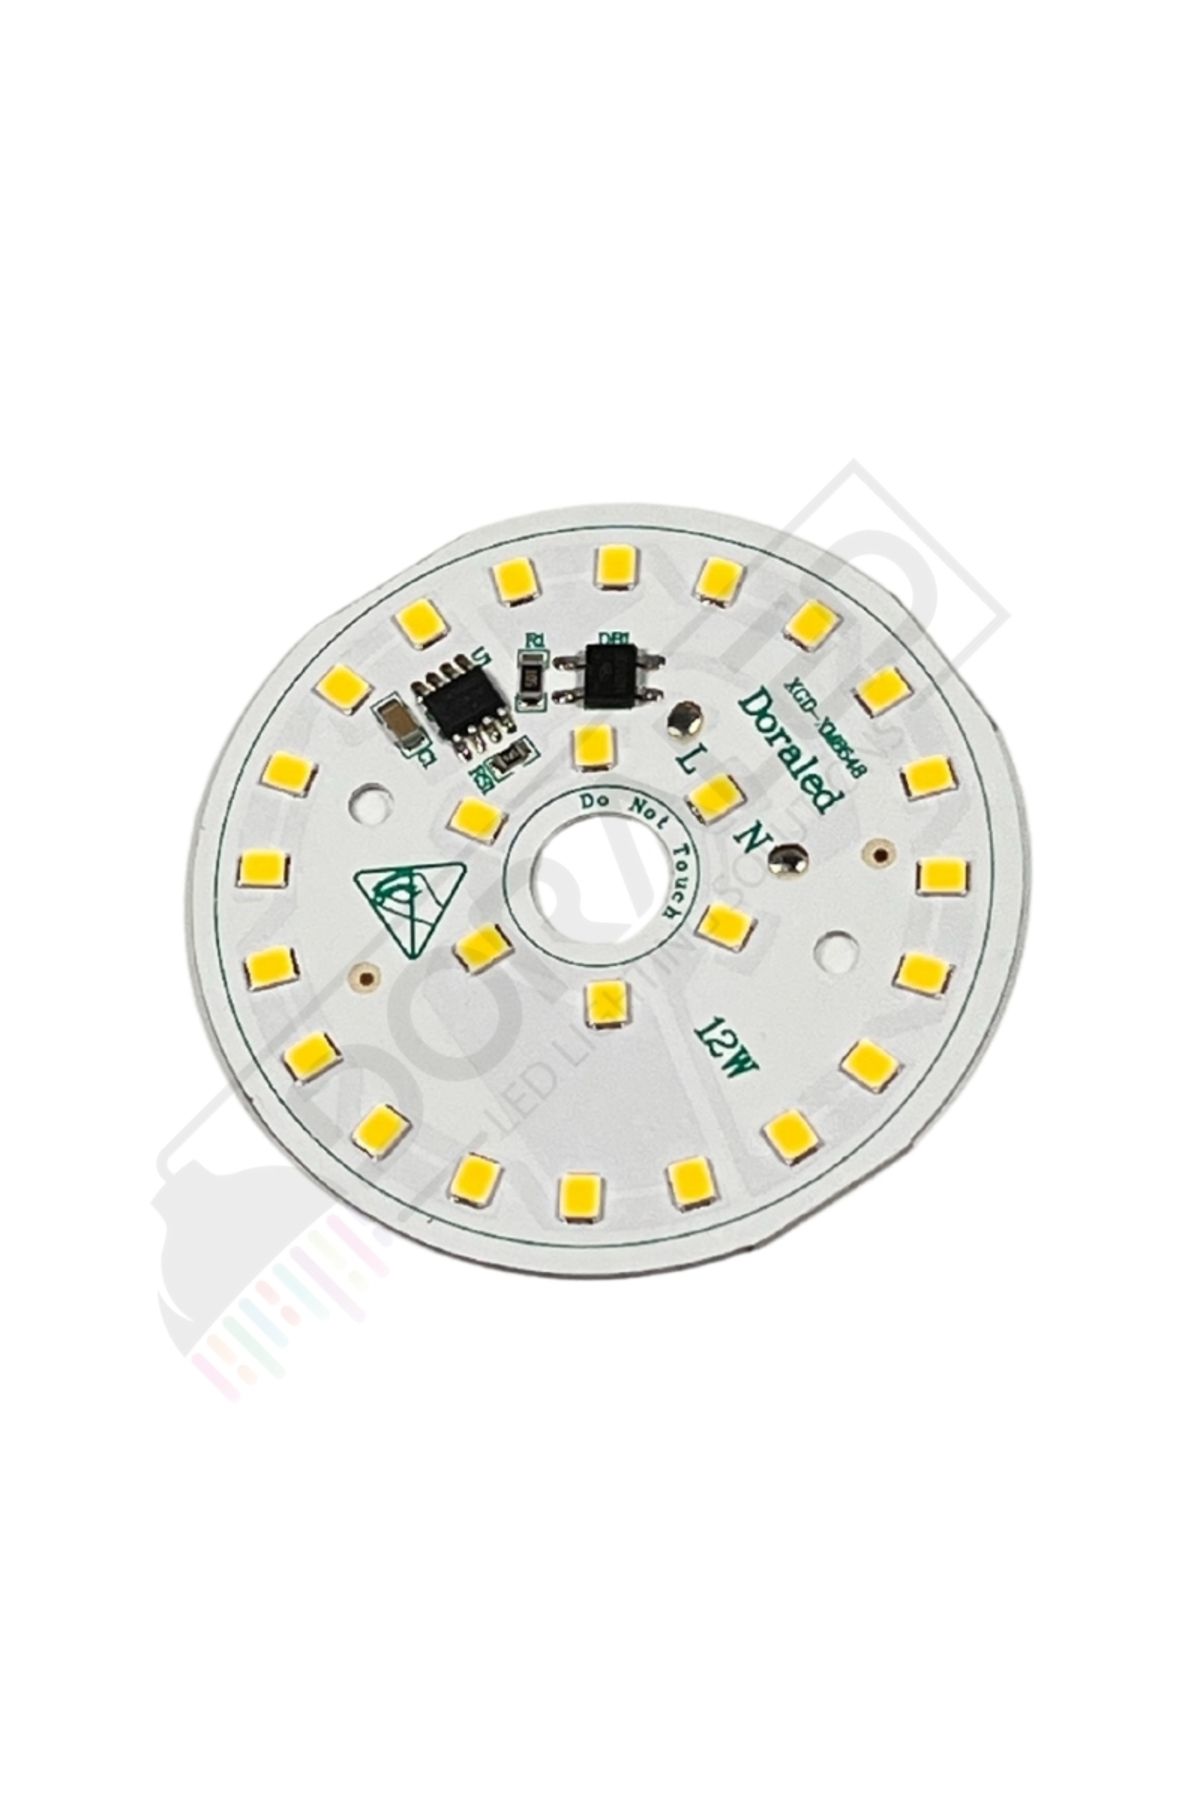 DORA LED 220volt 12watt Smd 5630 Ledli Led Modül Gün Işığı 10mm Delik Çaplı 220v 12w Avize Ledi 60mm(3 ADET)